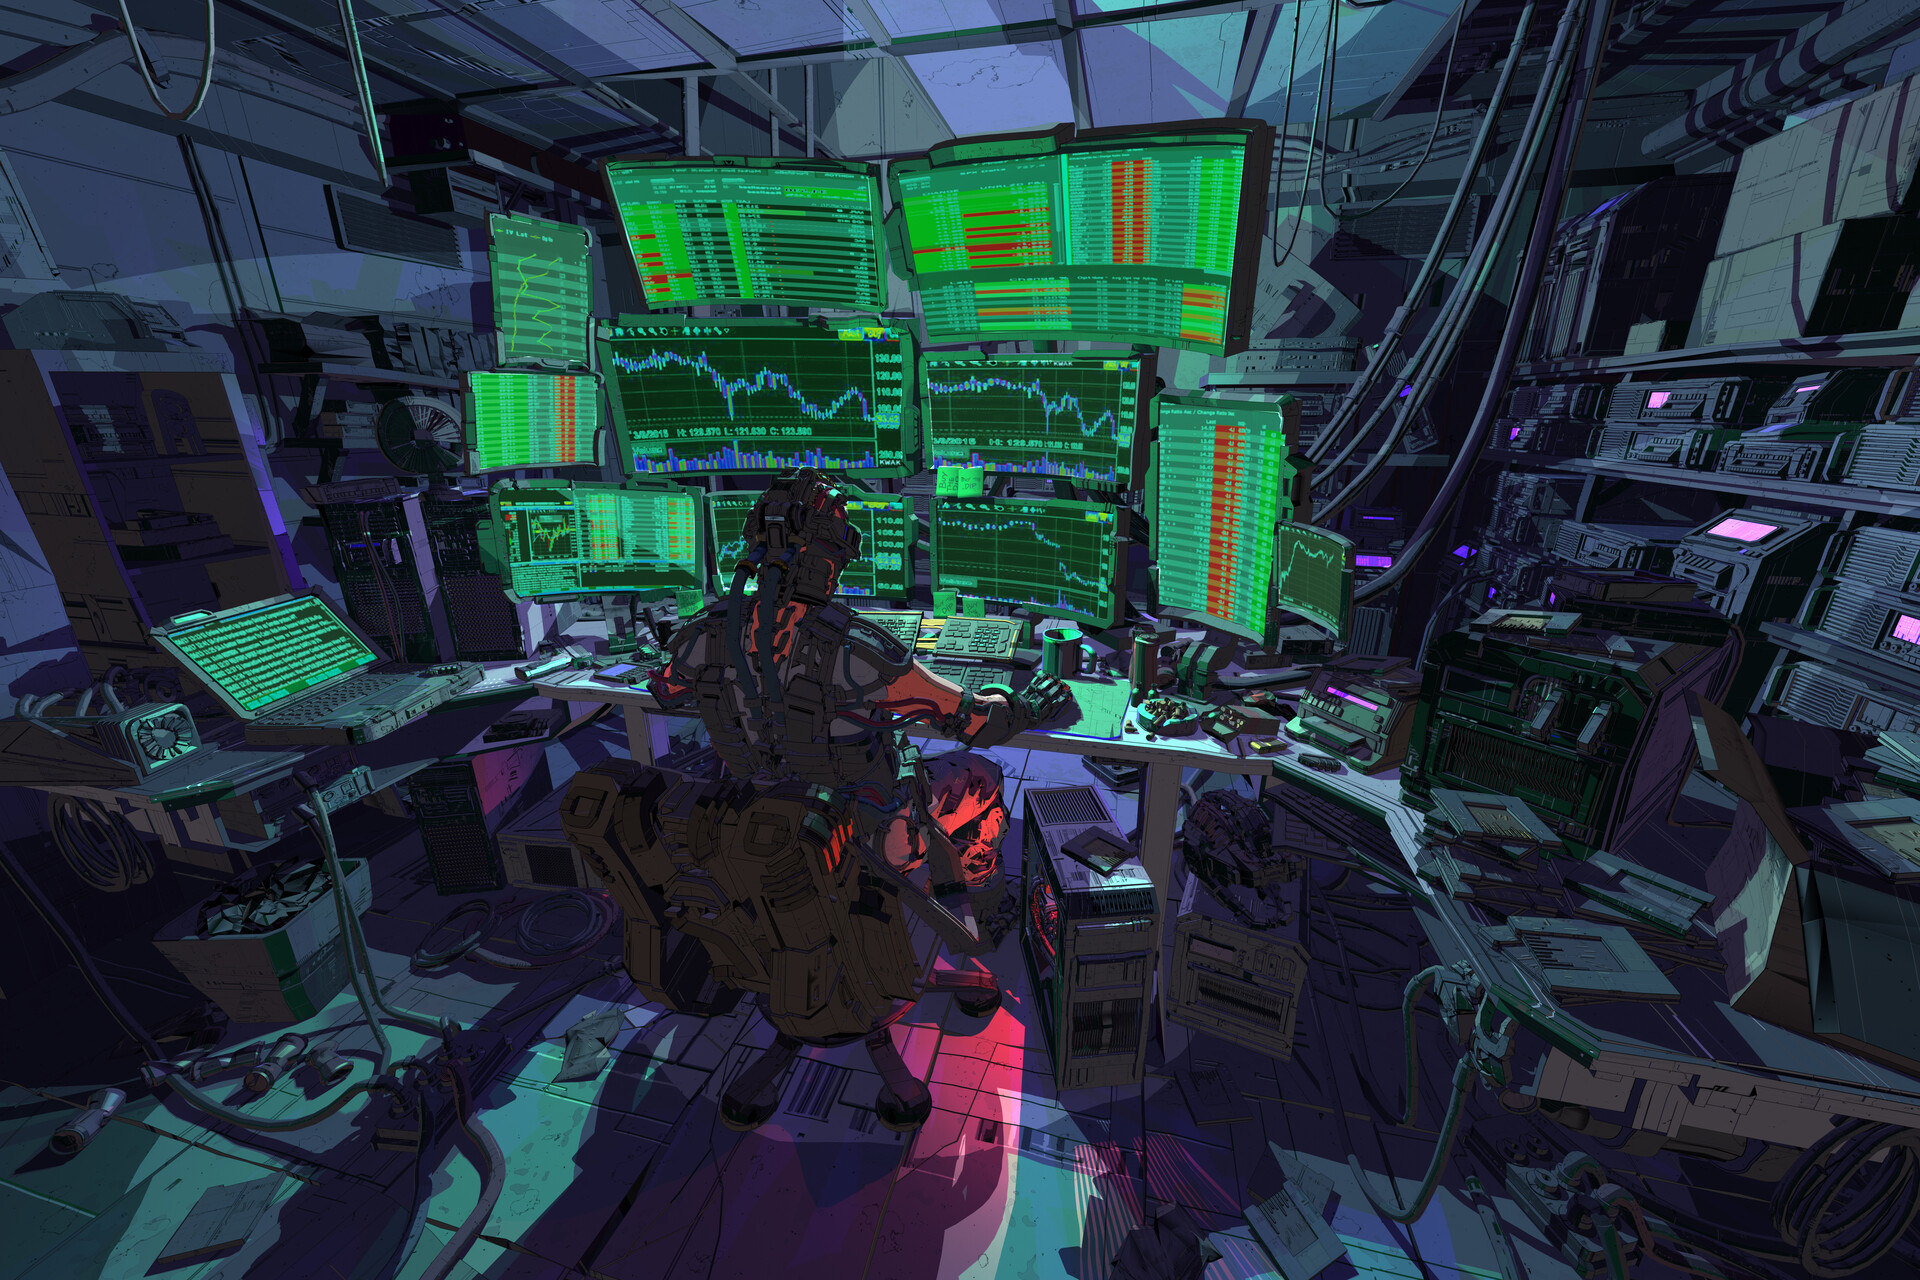 Cyberpunk Robot Hacking Stock Market Wallpaper, HD Artist 4K Wallpapers,  Images, Photos and Background - Wallpapers Den